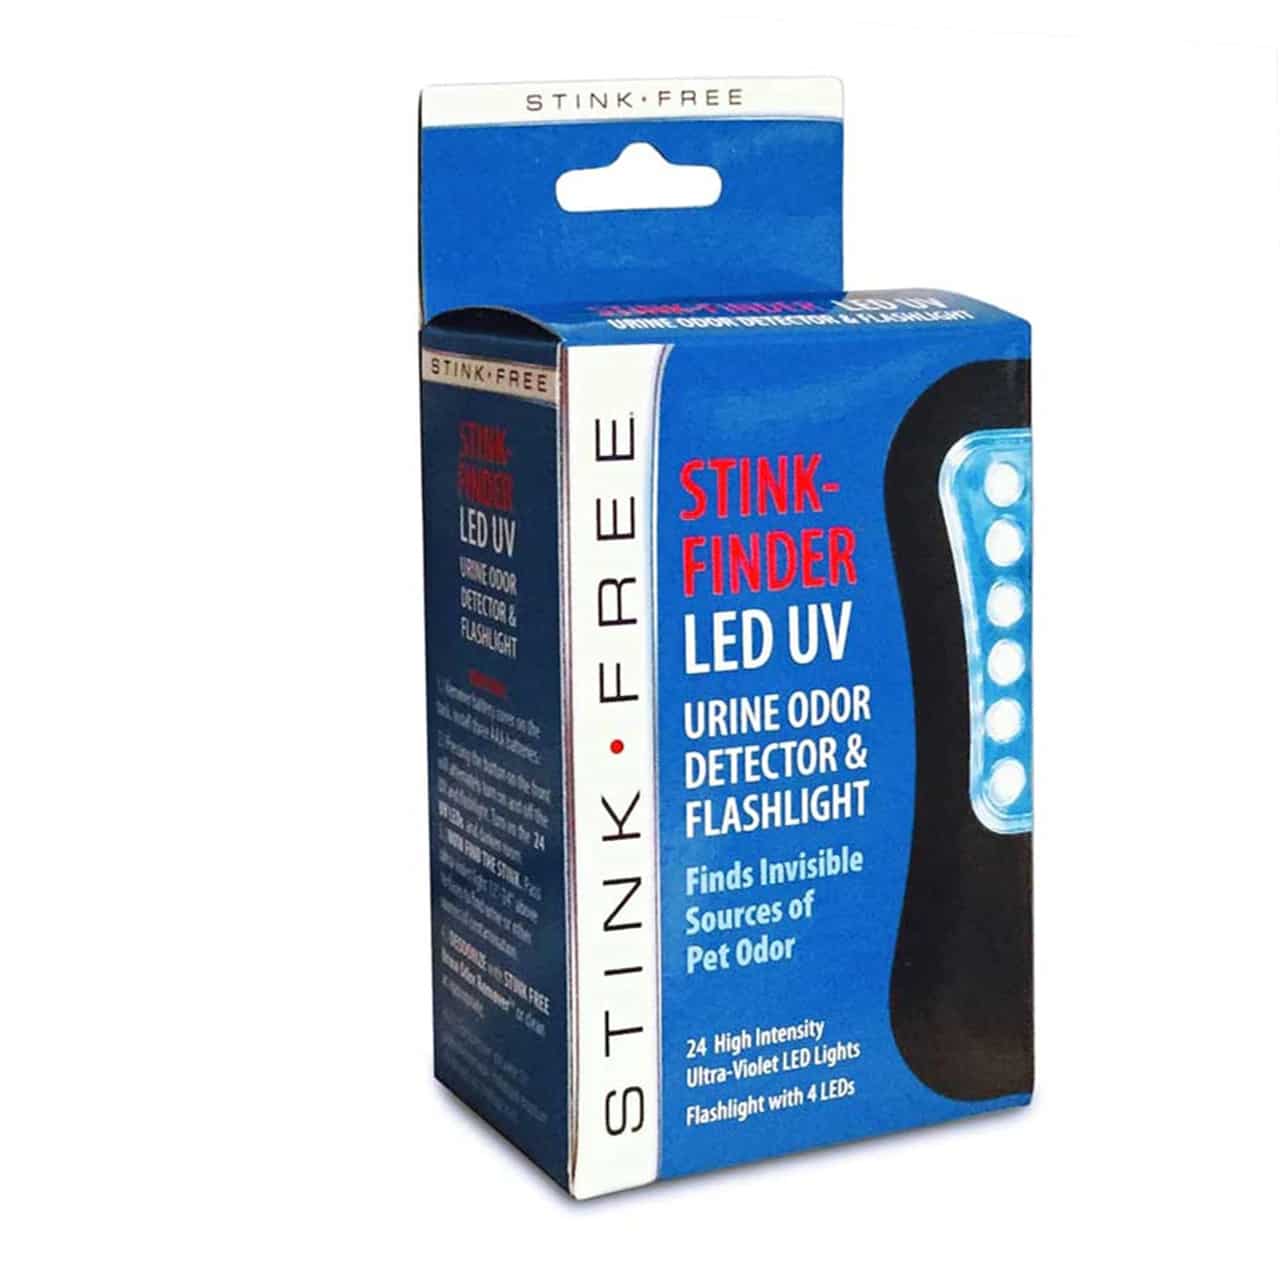 Stink Free Stink Finder LED UV Pet Urine Odor Detector & Flashlight